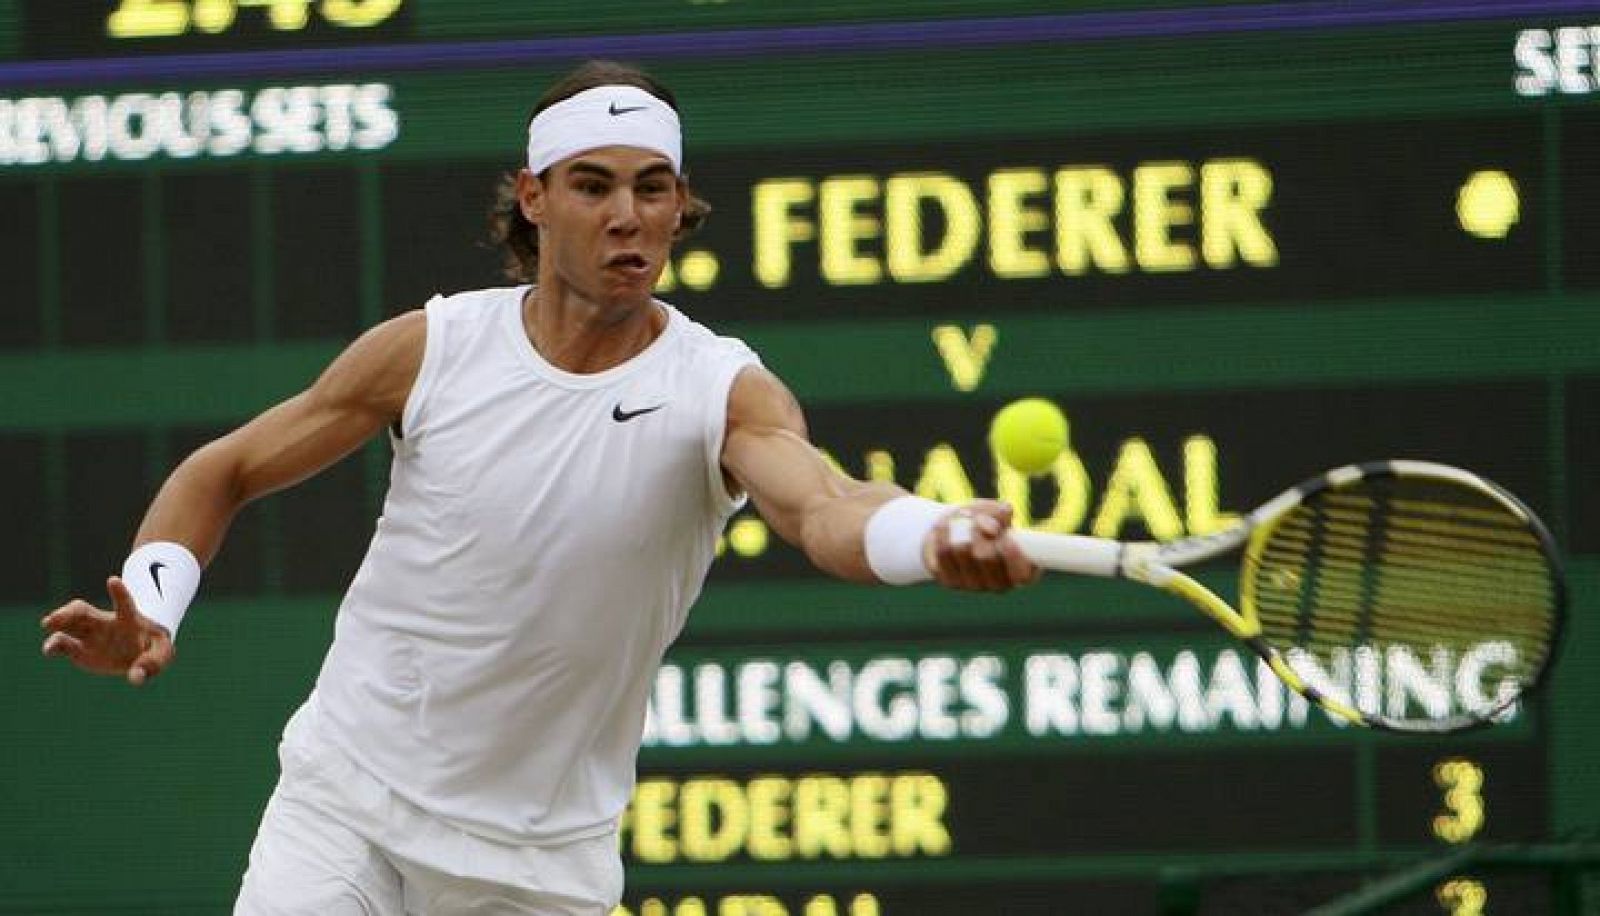 En vivo: Rafael Nadal contra Federer en la final de Wimbledon RTVE.es